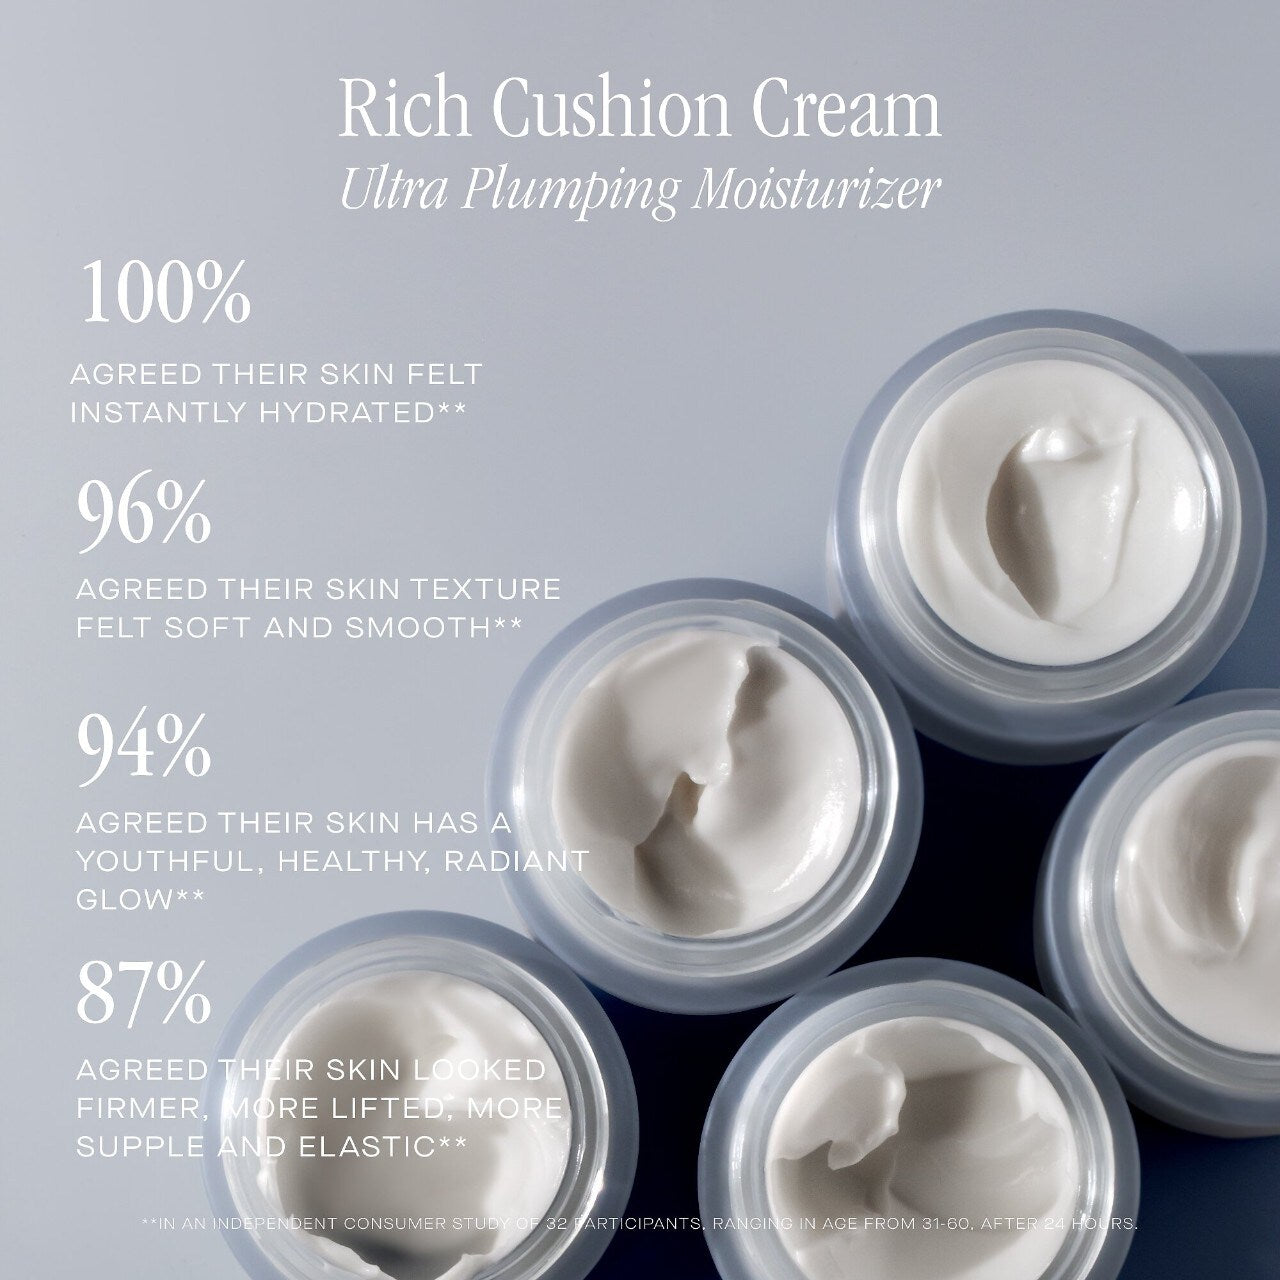 Rich Cushion Cream Ultra Plumping Moisturizer